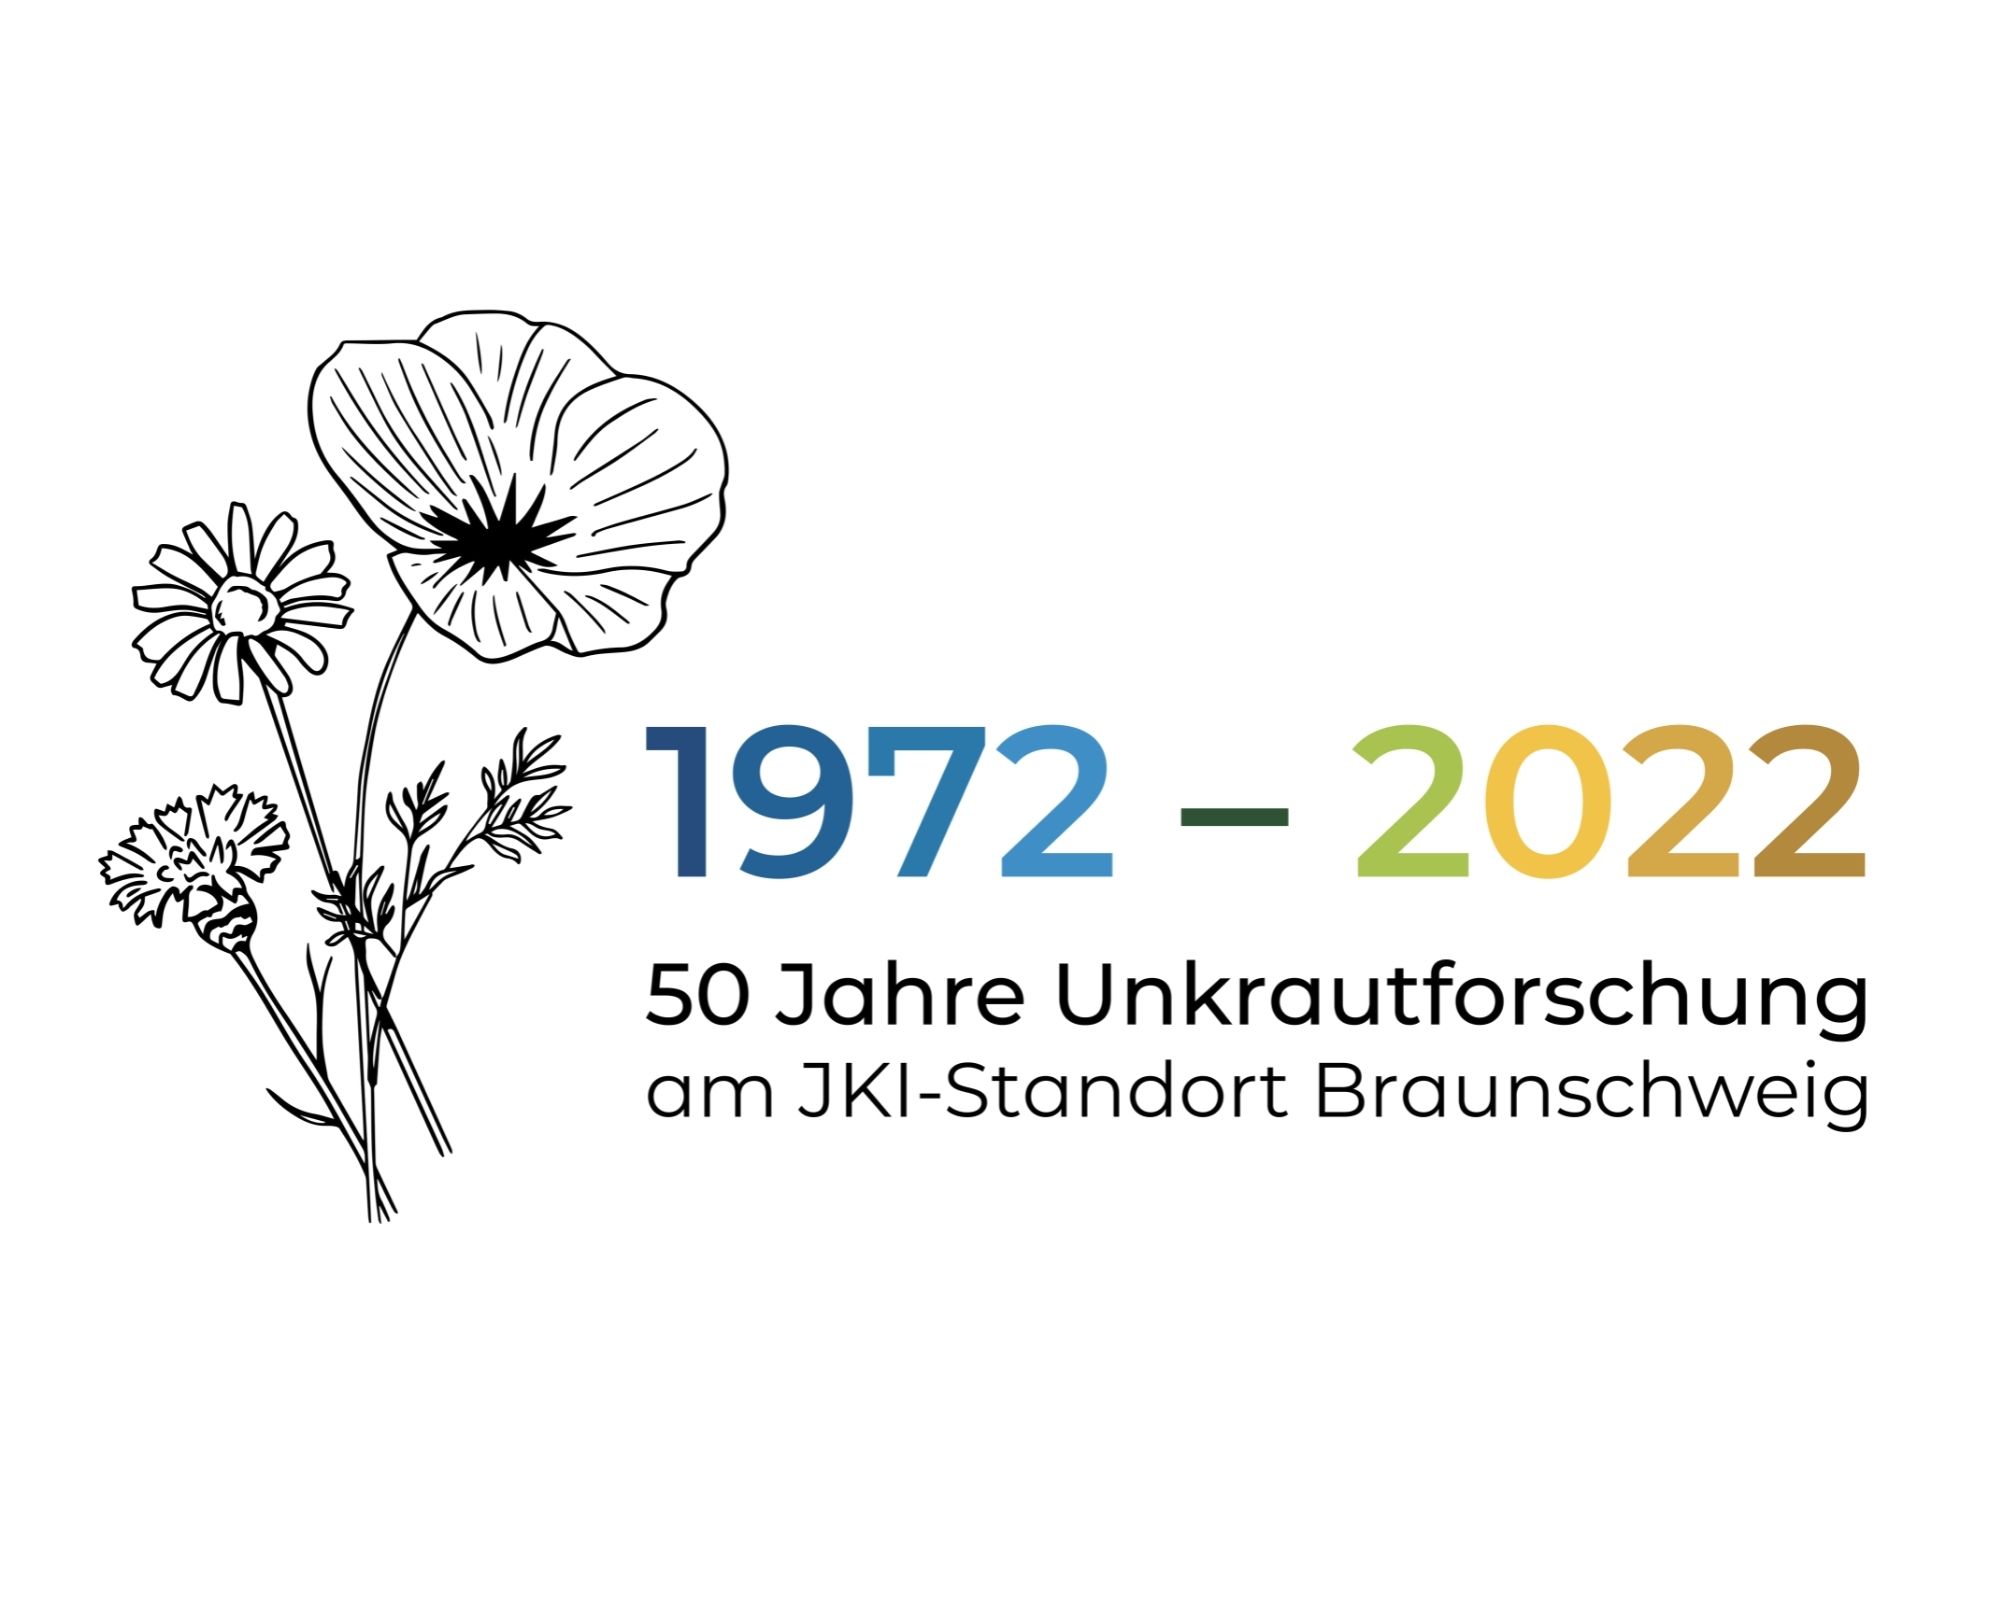 Logo des 50jährigen Jubiläums der Unkrautforschung am Standort Braunschweig.